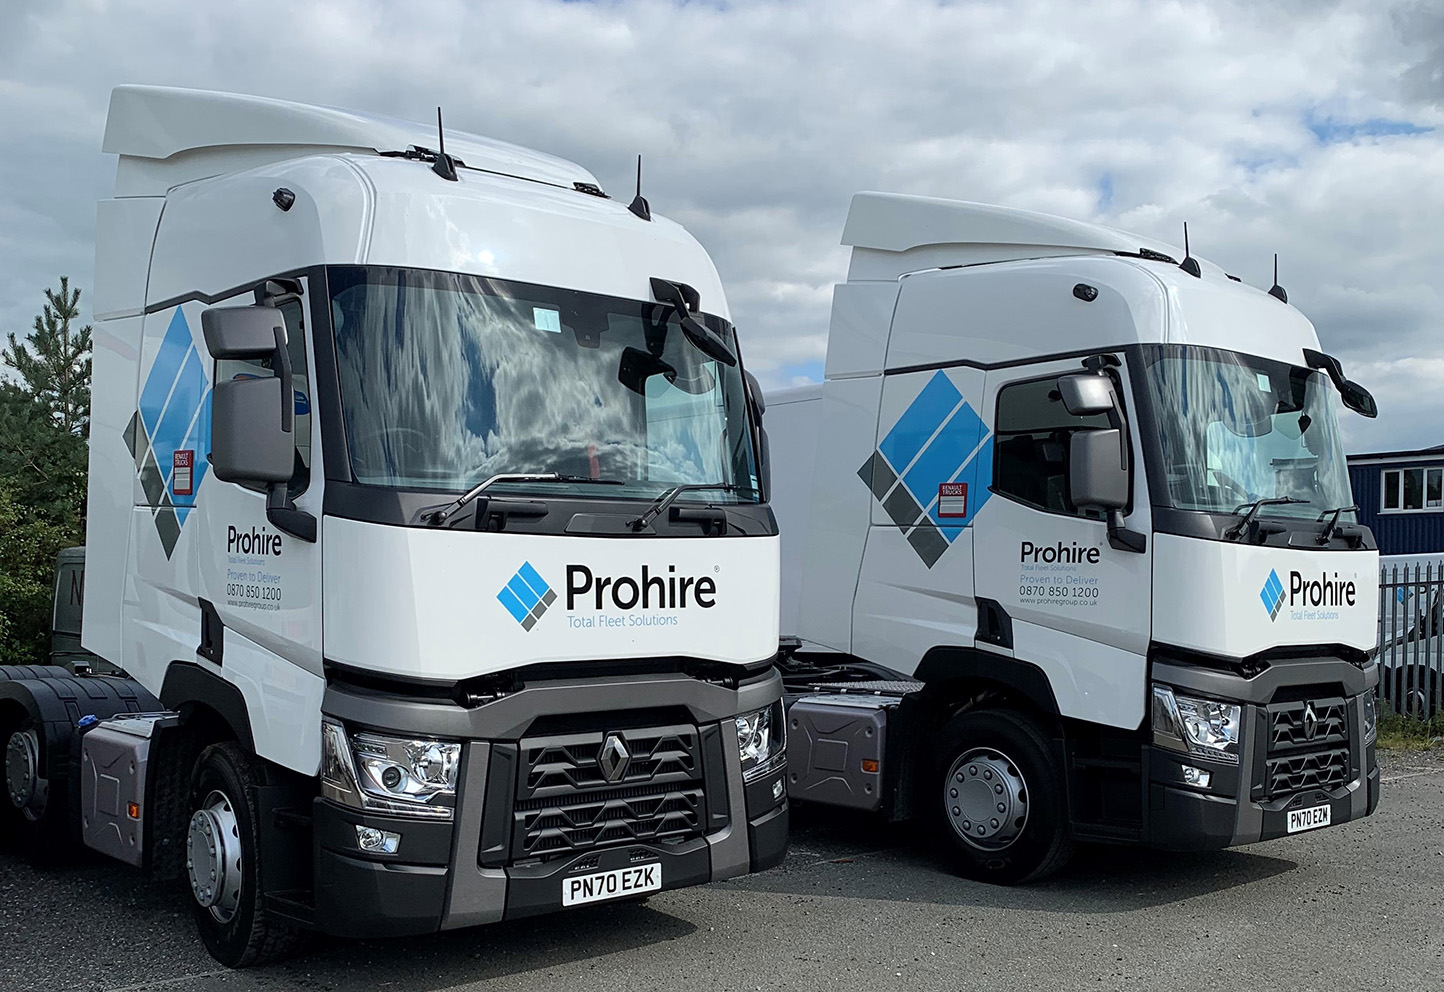 Prohire enhances customer service with TNS 365